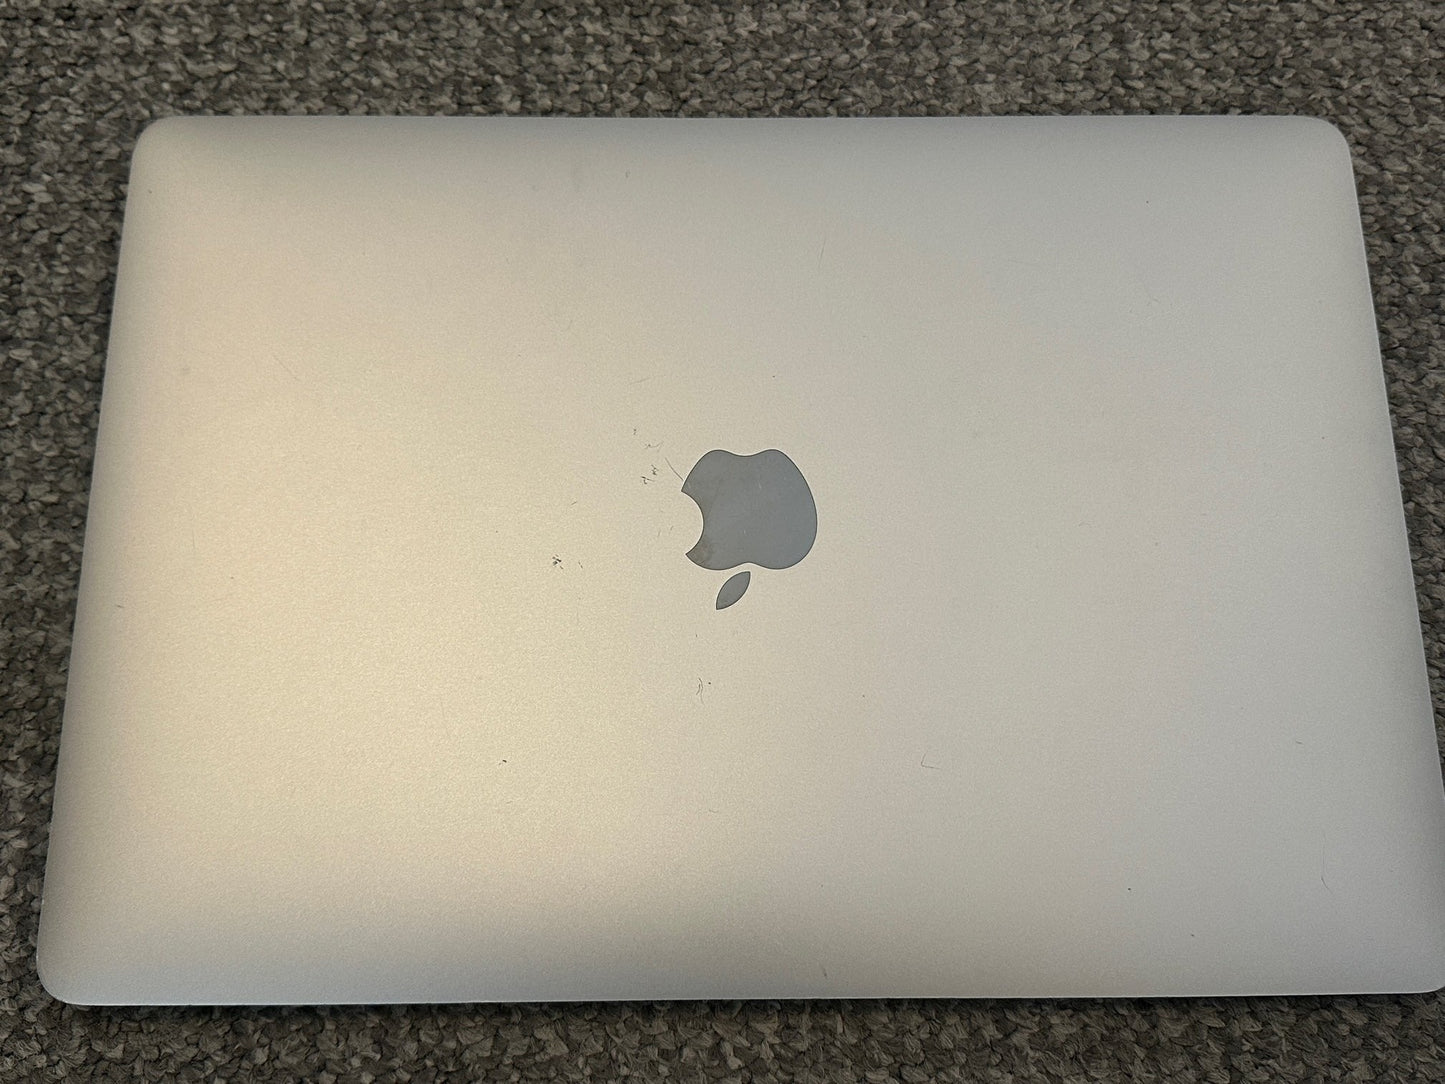 MacBook Pro 13-Inch Intel i5 2.0Ghz, 8gb 128gb (2016) GRADE B